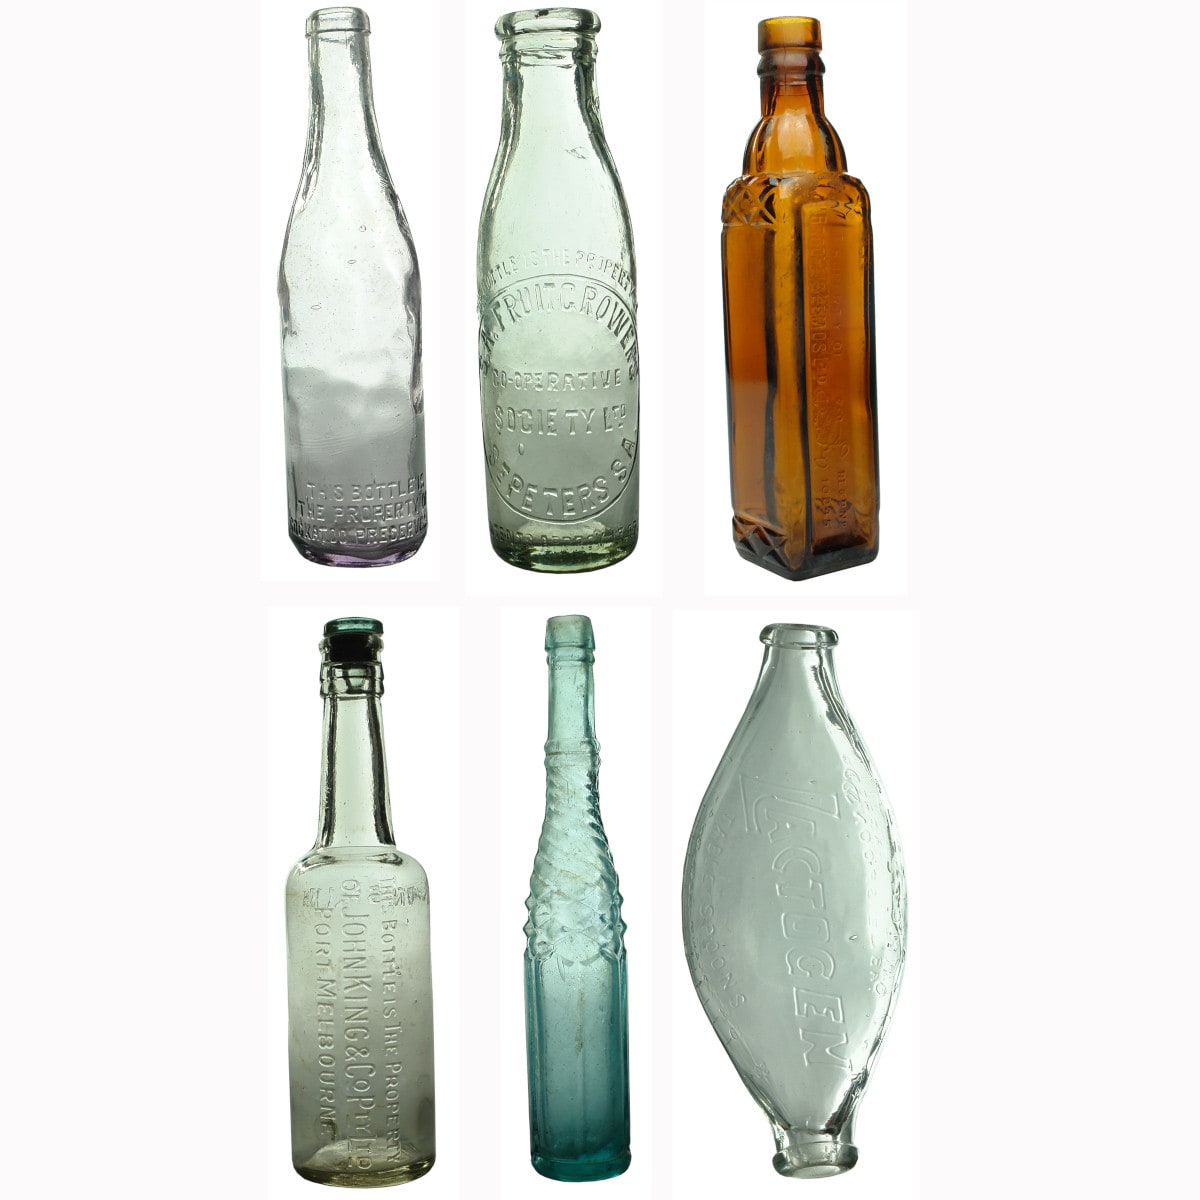 Six Household Bottles: Cockatoo, SA Fruitgrowers, Brookes, John King, Whirly, Lactogen.